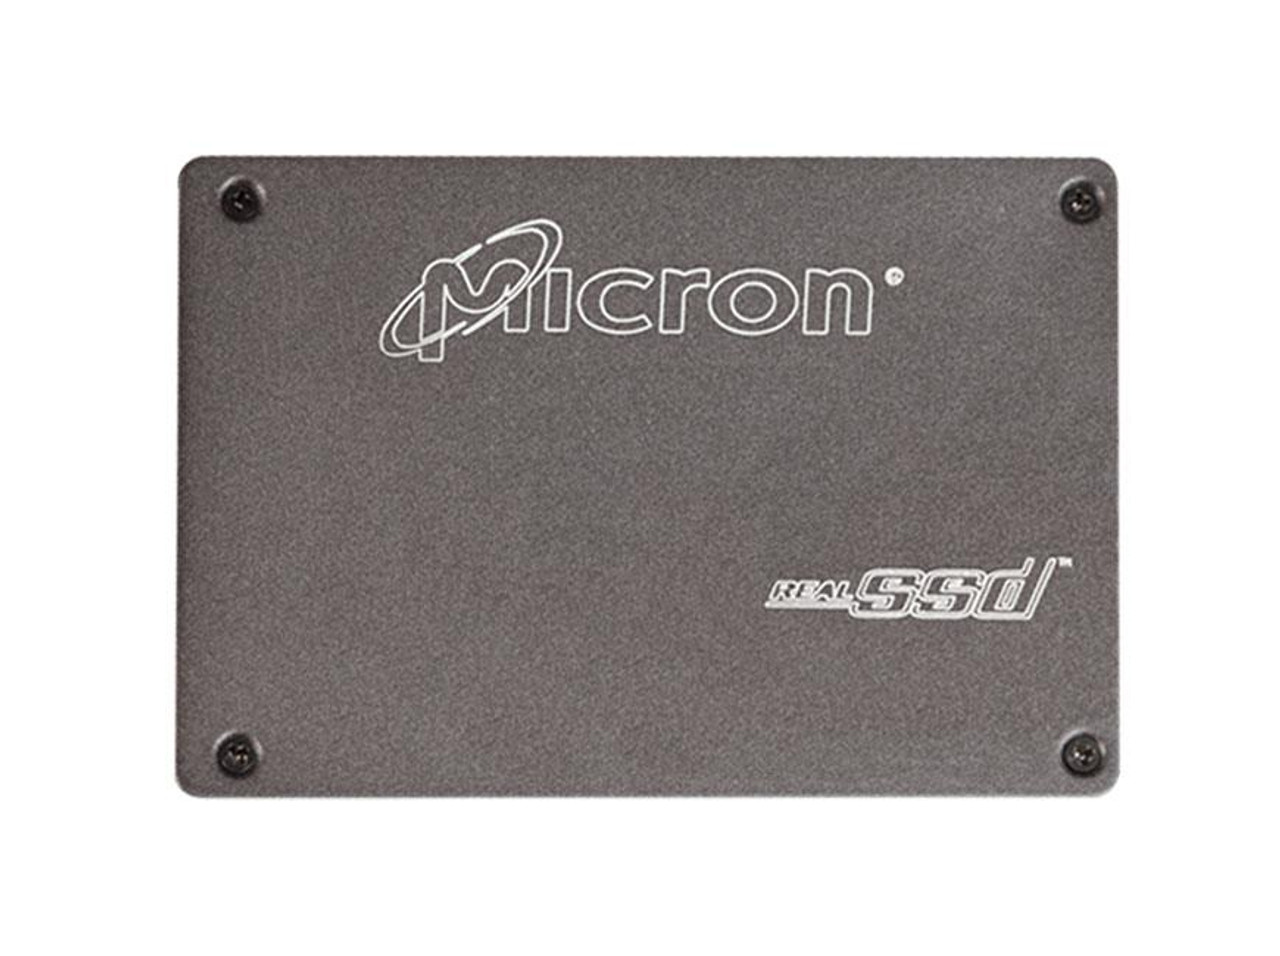 CTFDBAC120MAE Micron RealSSD C200 120GB MLC SATA 3Gbps 2.5-inch Internal Solid State Drive (SSD)